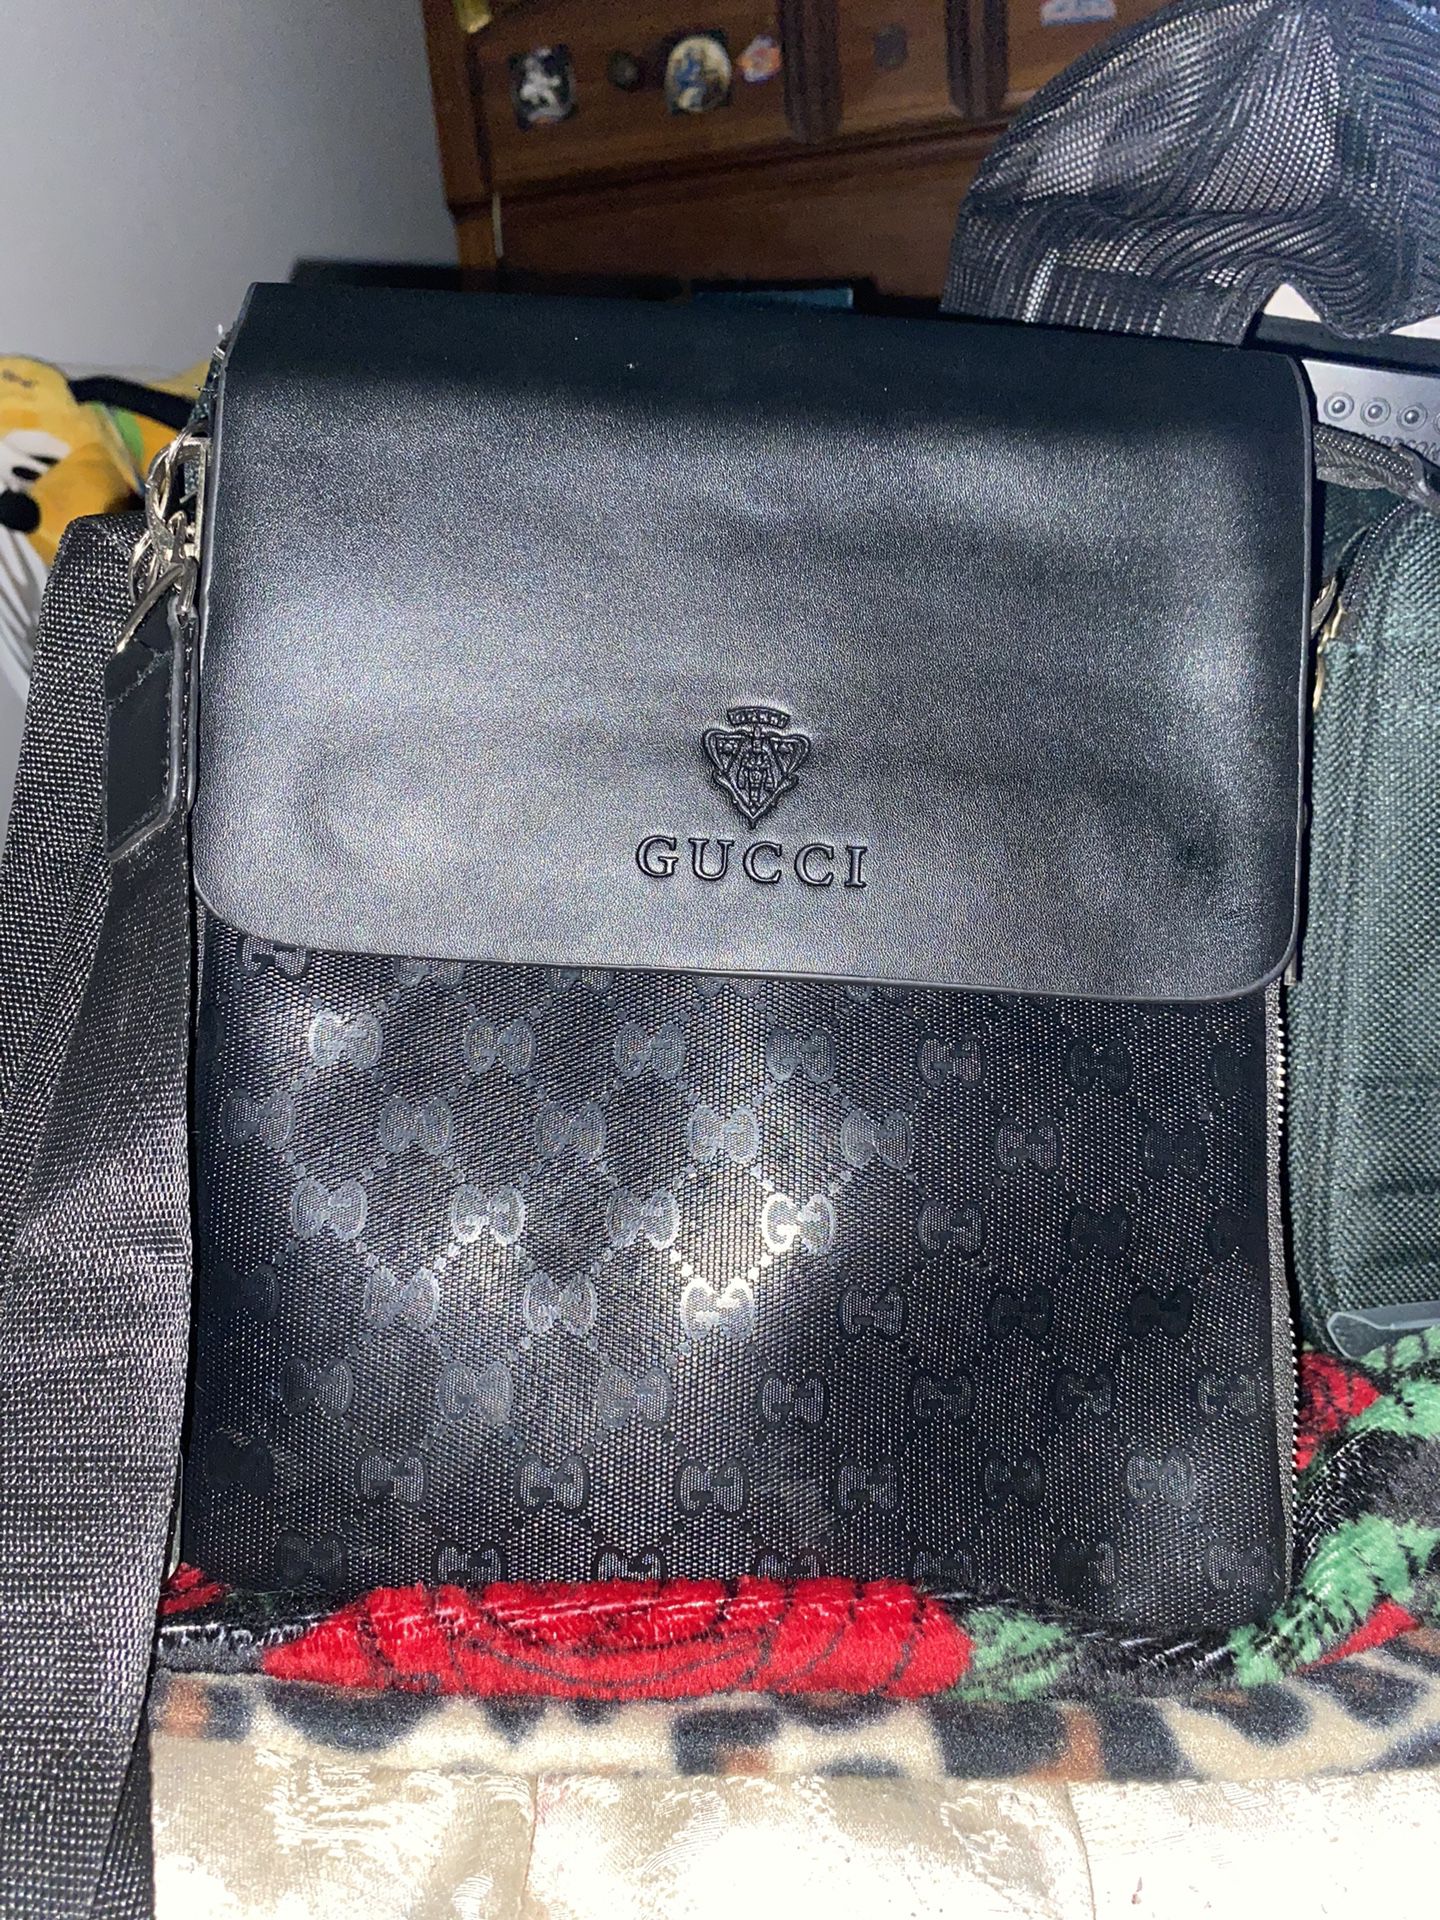 Gucci, Black, Messenger Bag.